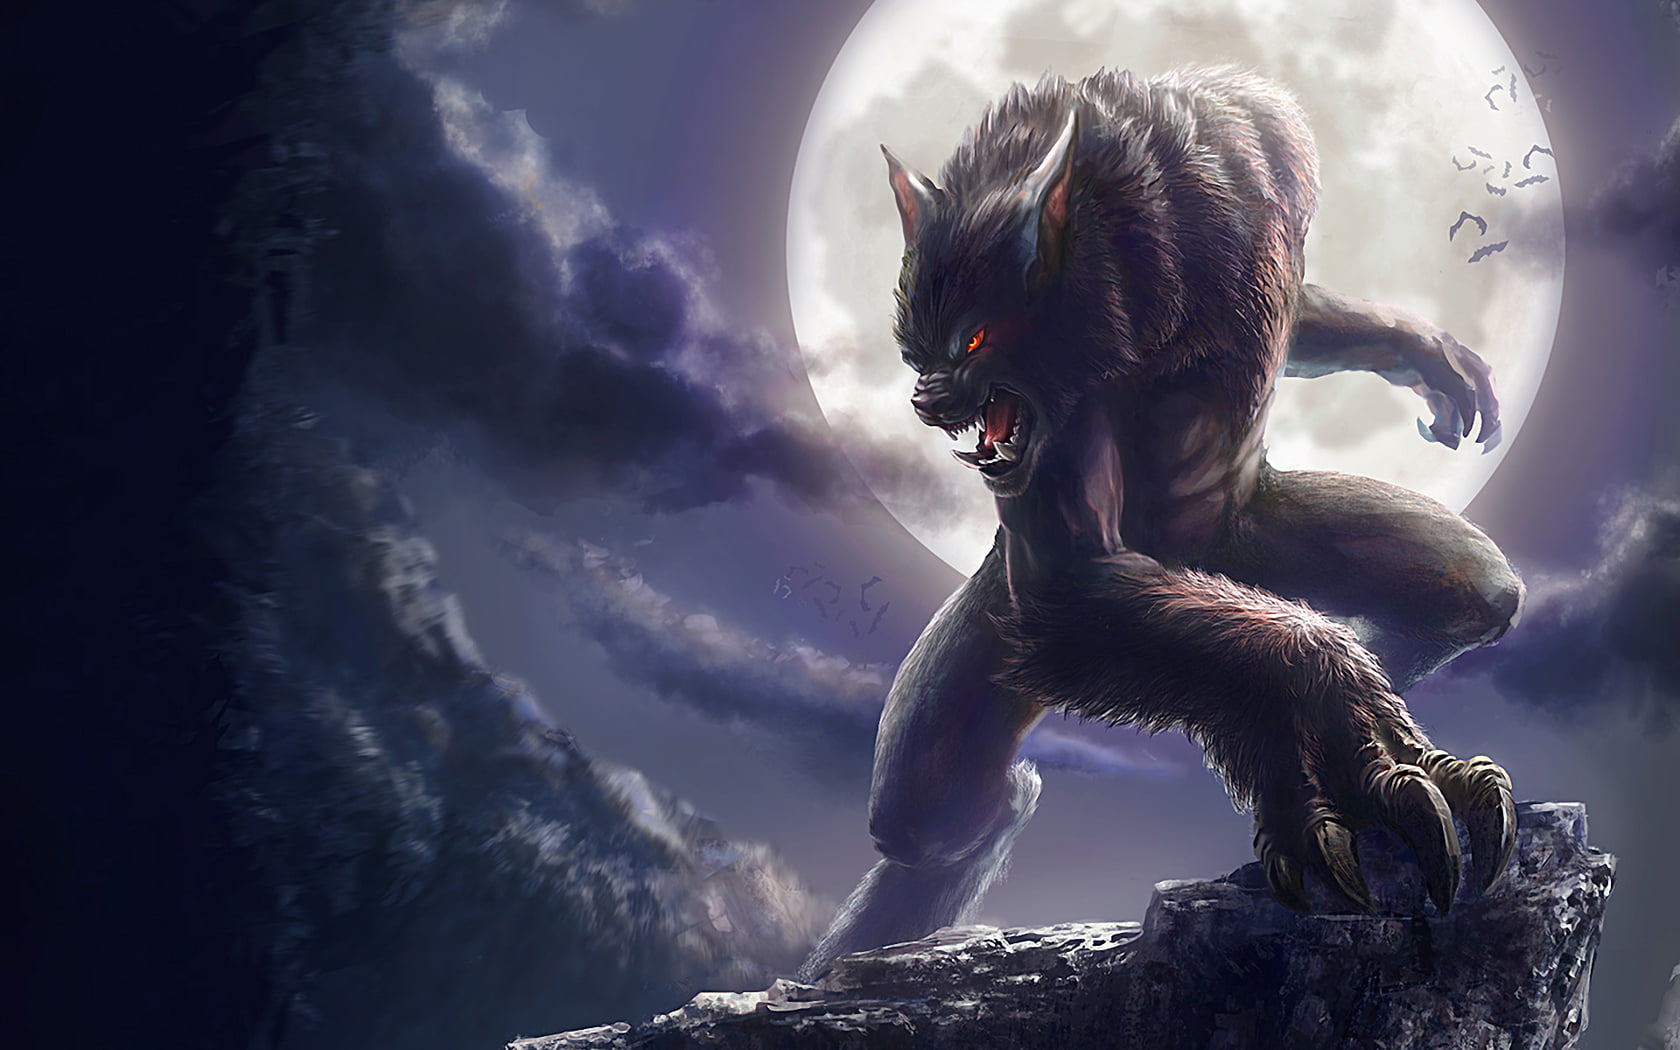 Werewolf And Full Moon, wolf wallpaper, Games, night, horror